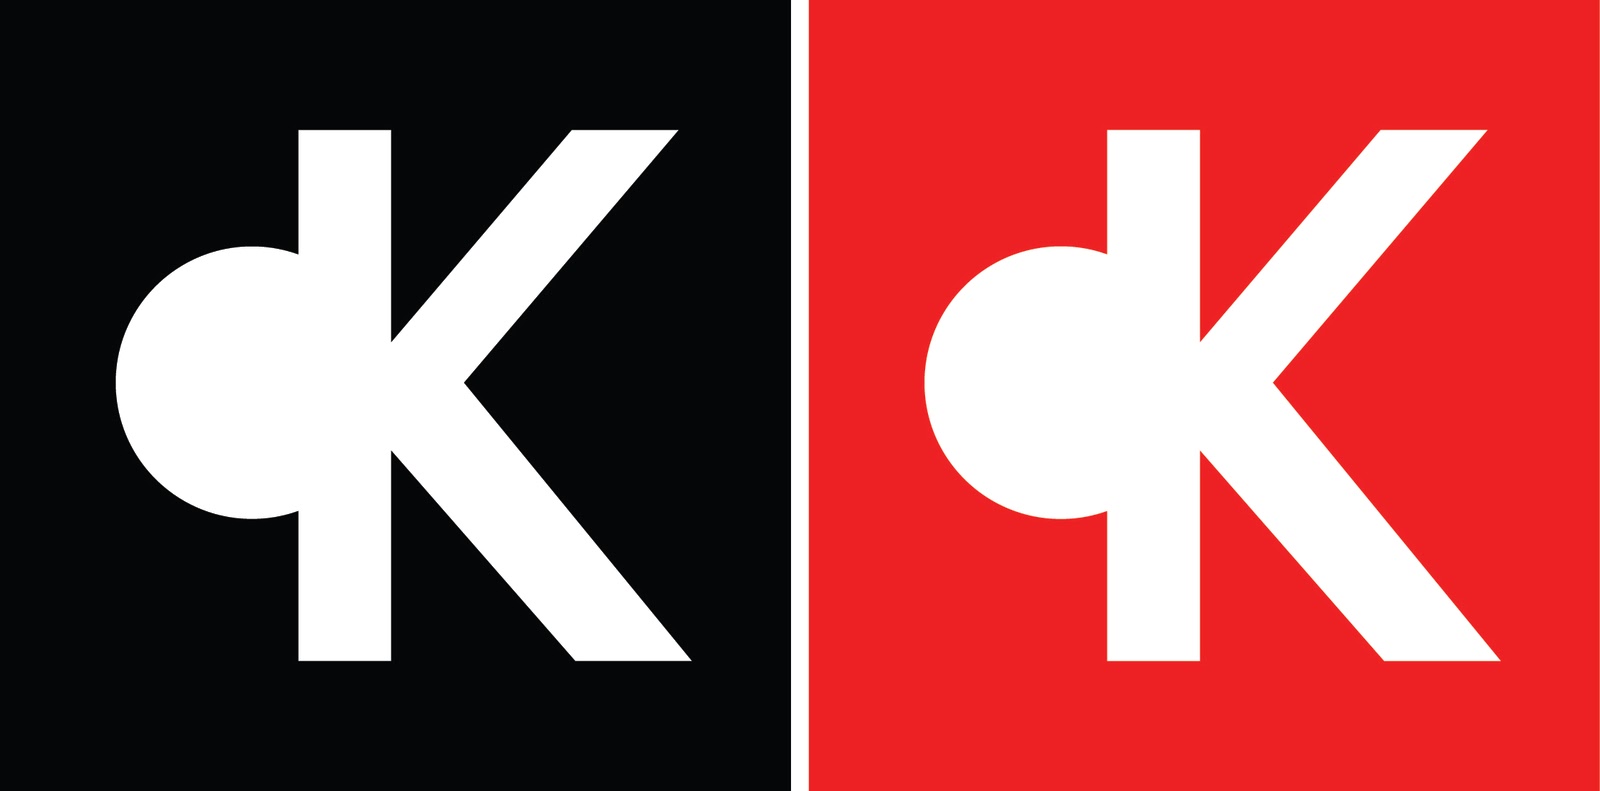 Ck Logo